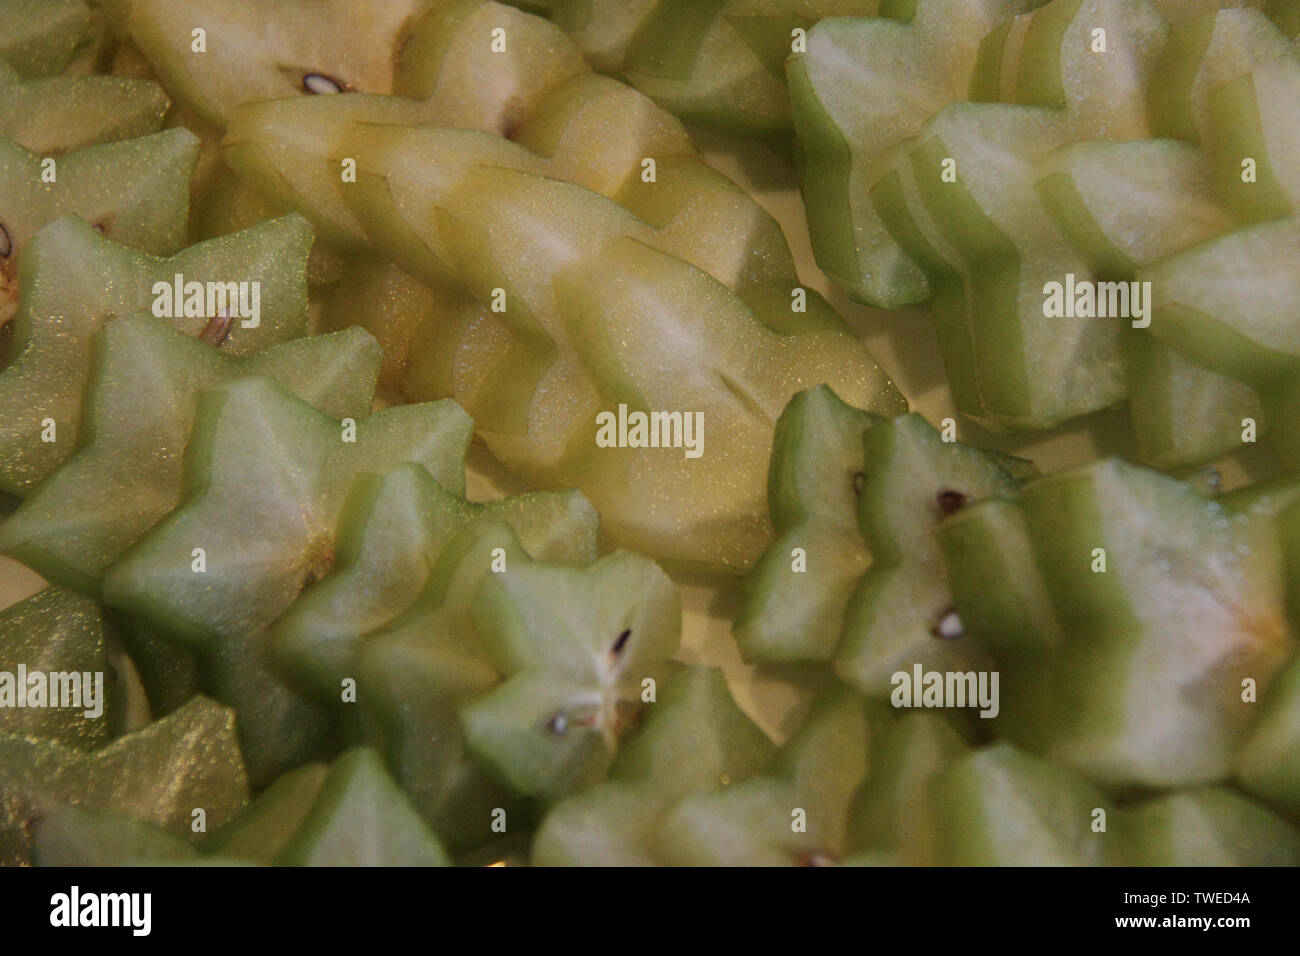 Close up of starfruit slices Stock Photo